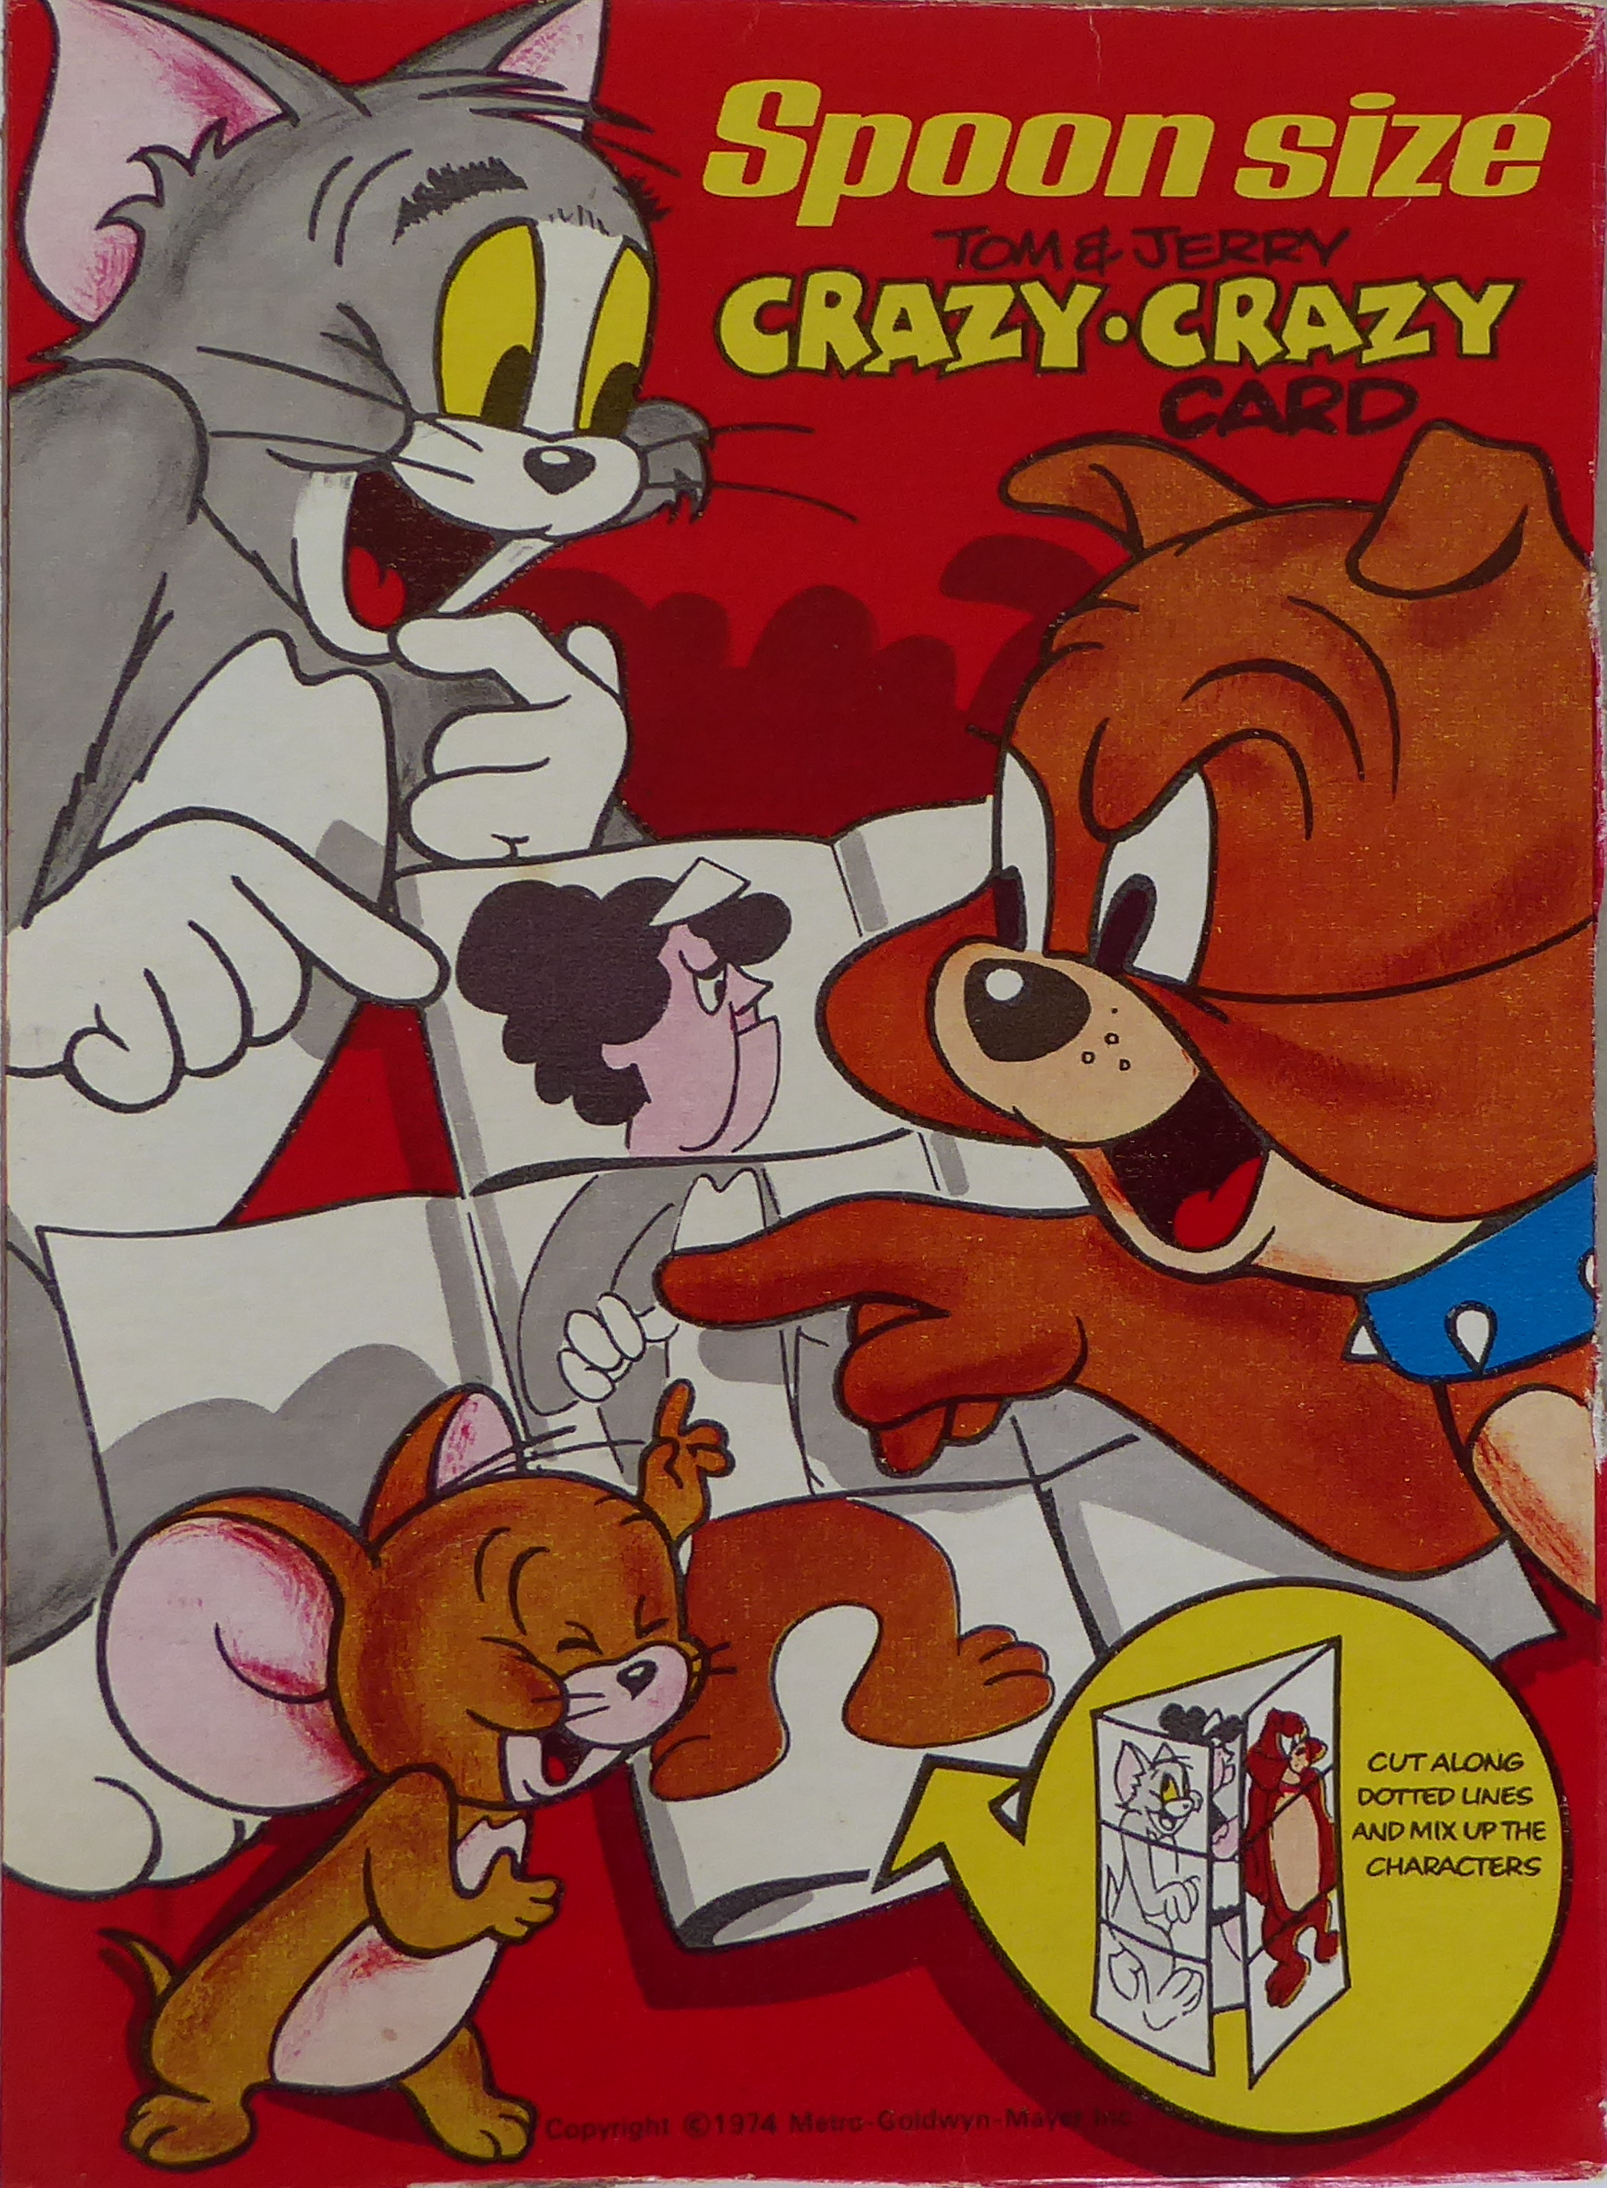 1974 Shredded Wheat Spoonsize Tom & Jerry Crazy Card (2)